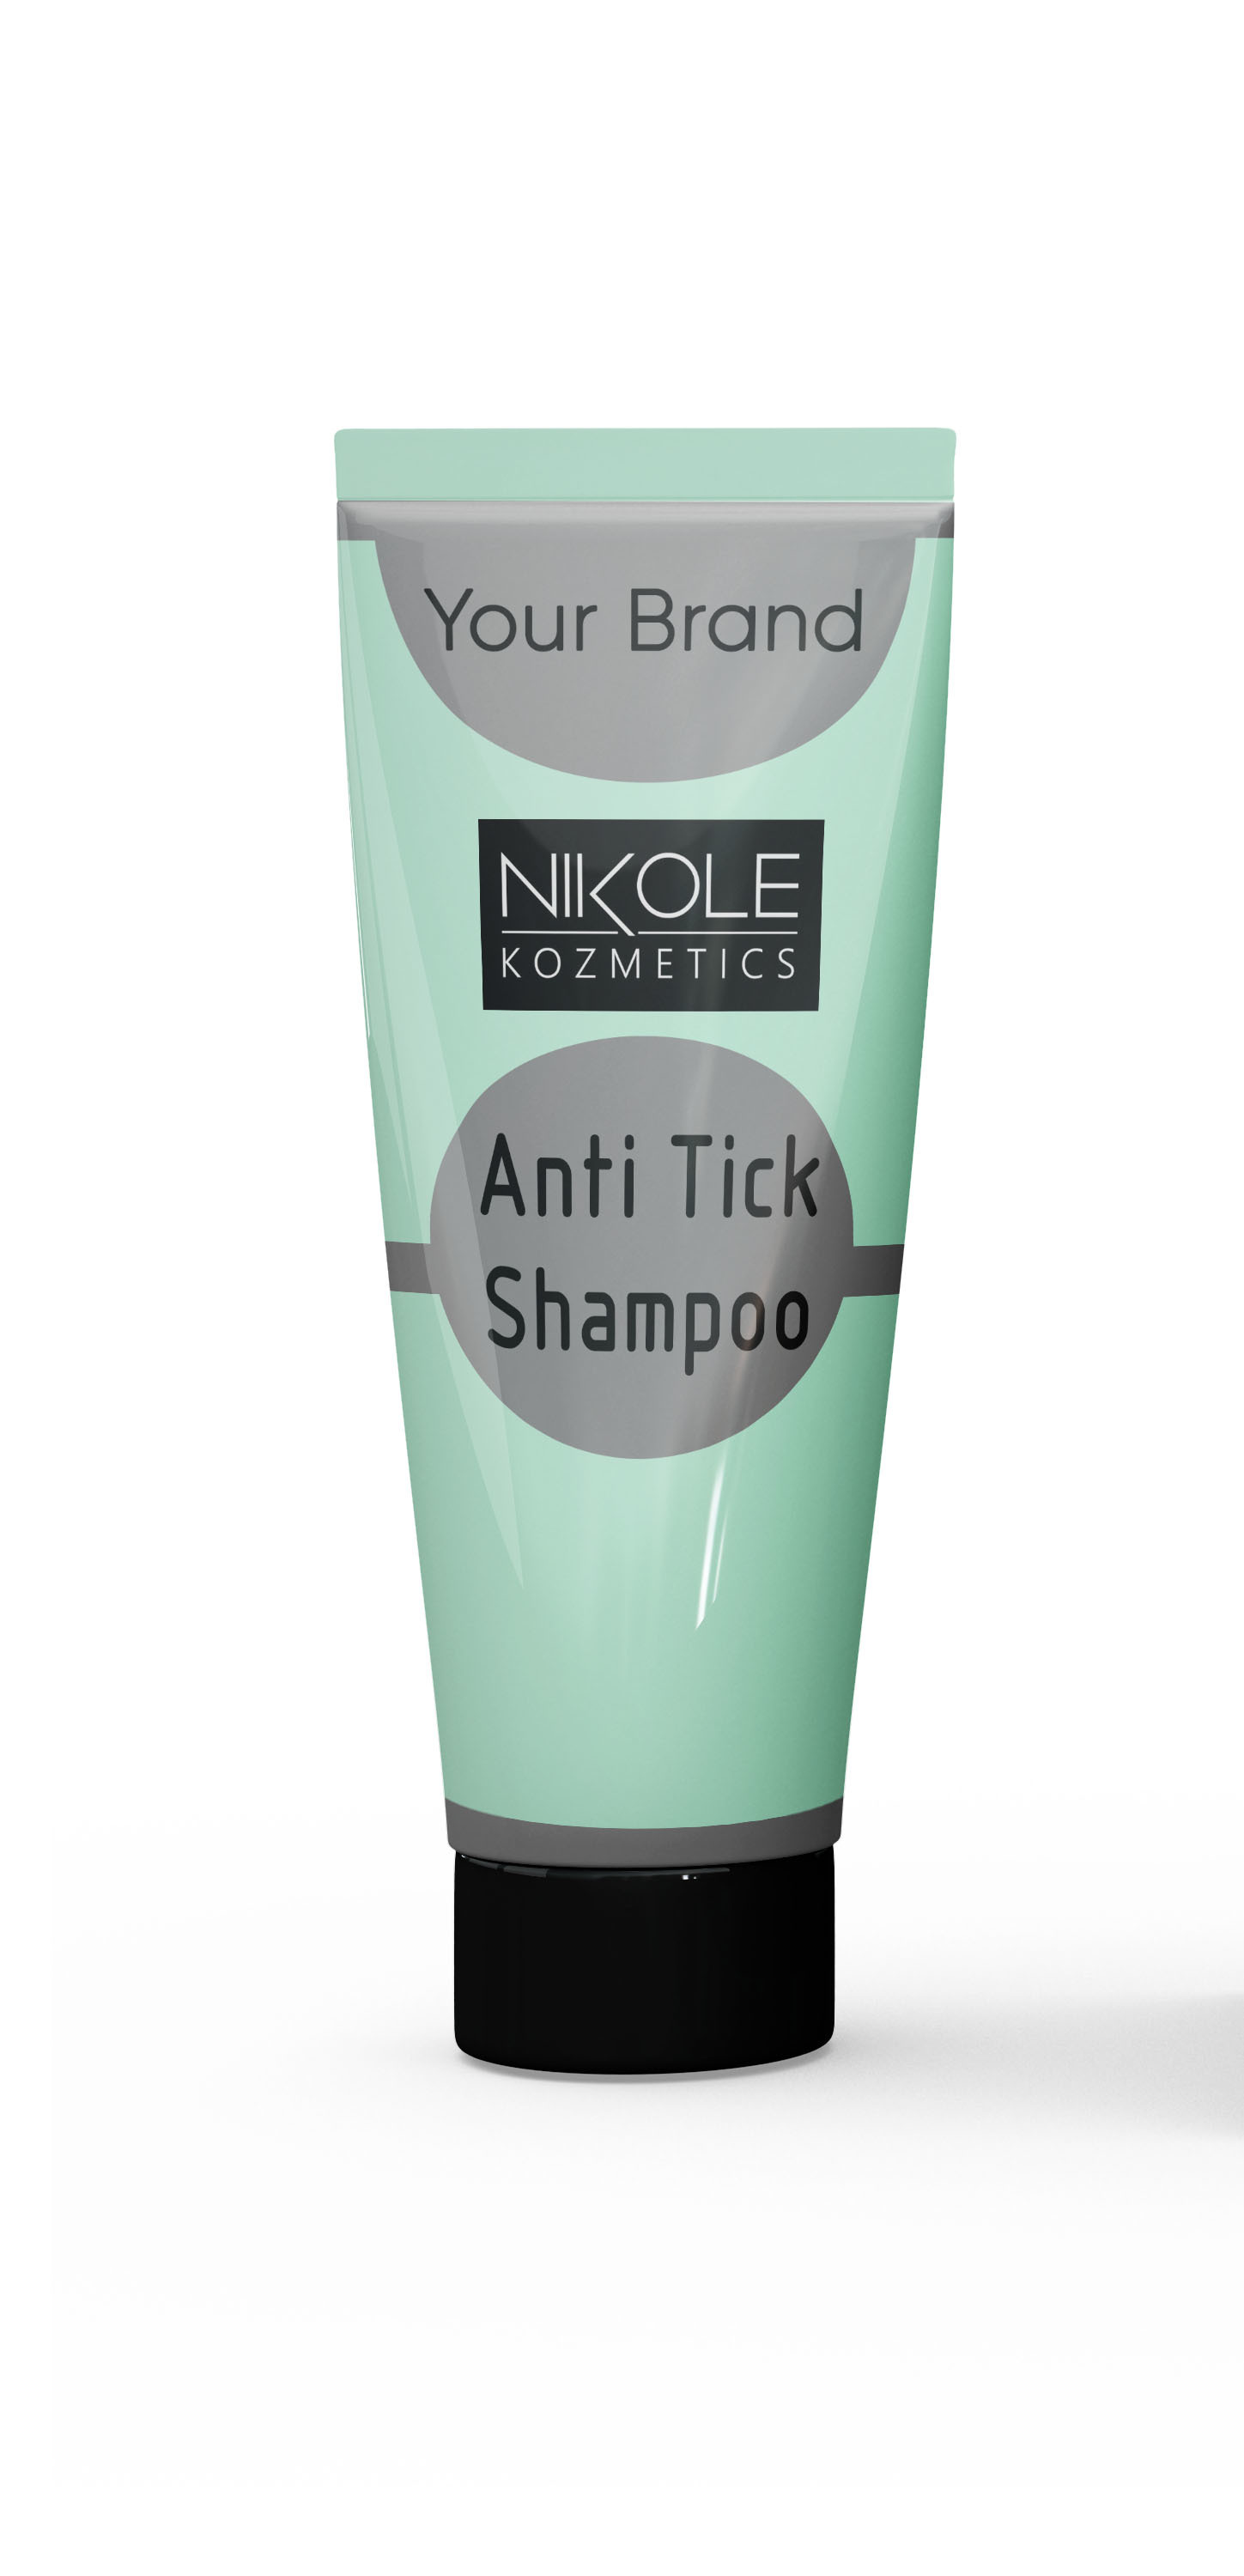 Anti Tick Shampoo Third Party Manufacturing